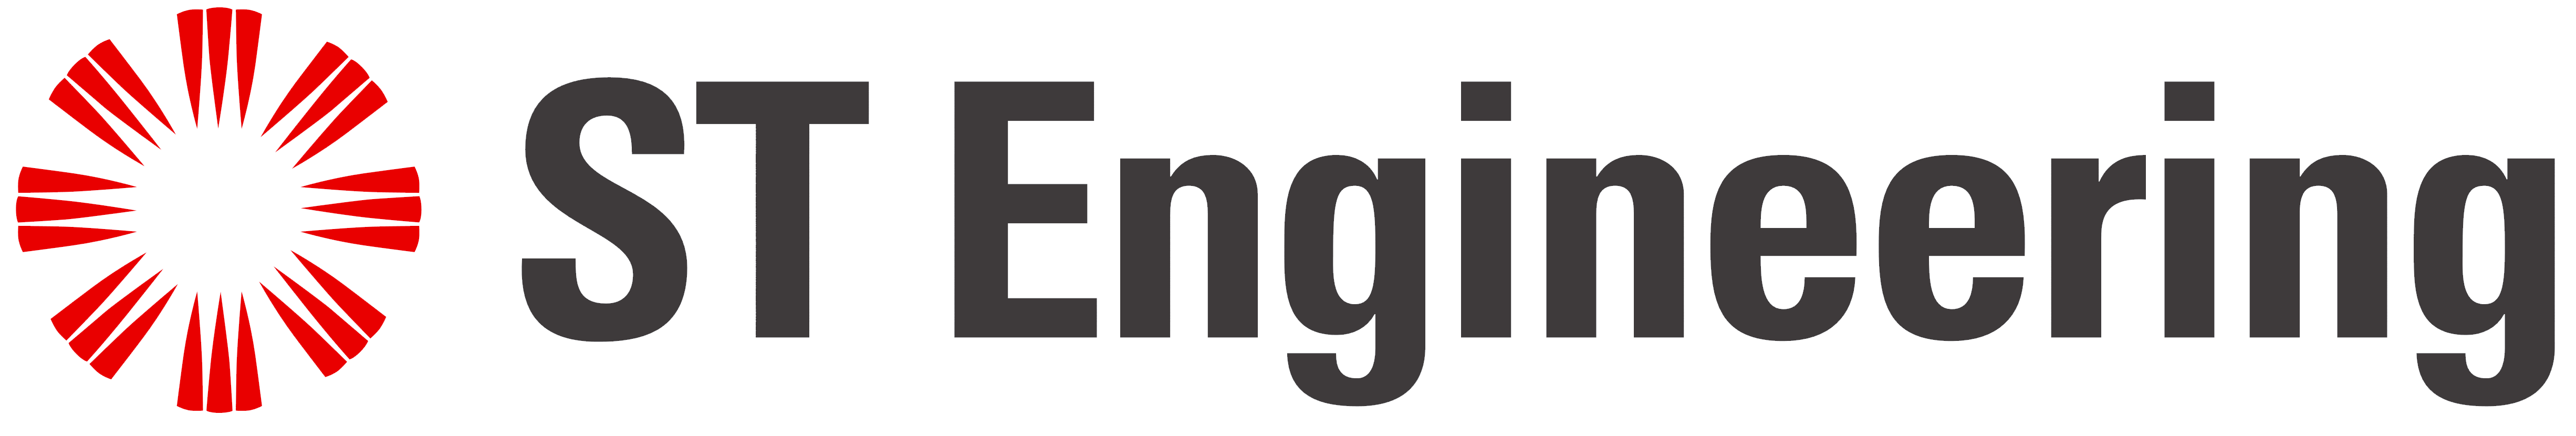 Singapore Technologies Engineering Brand Logo